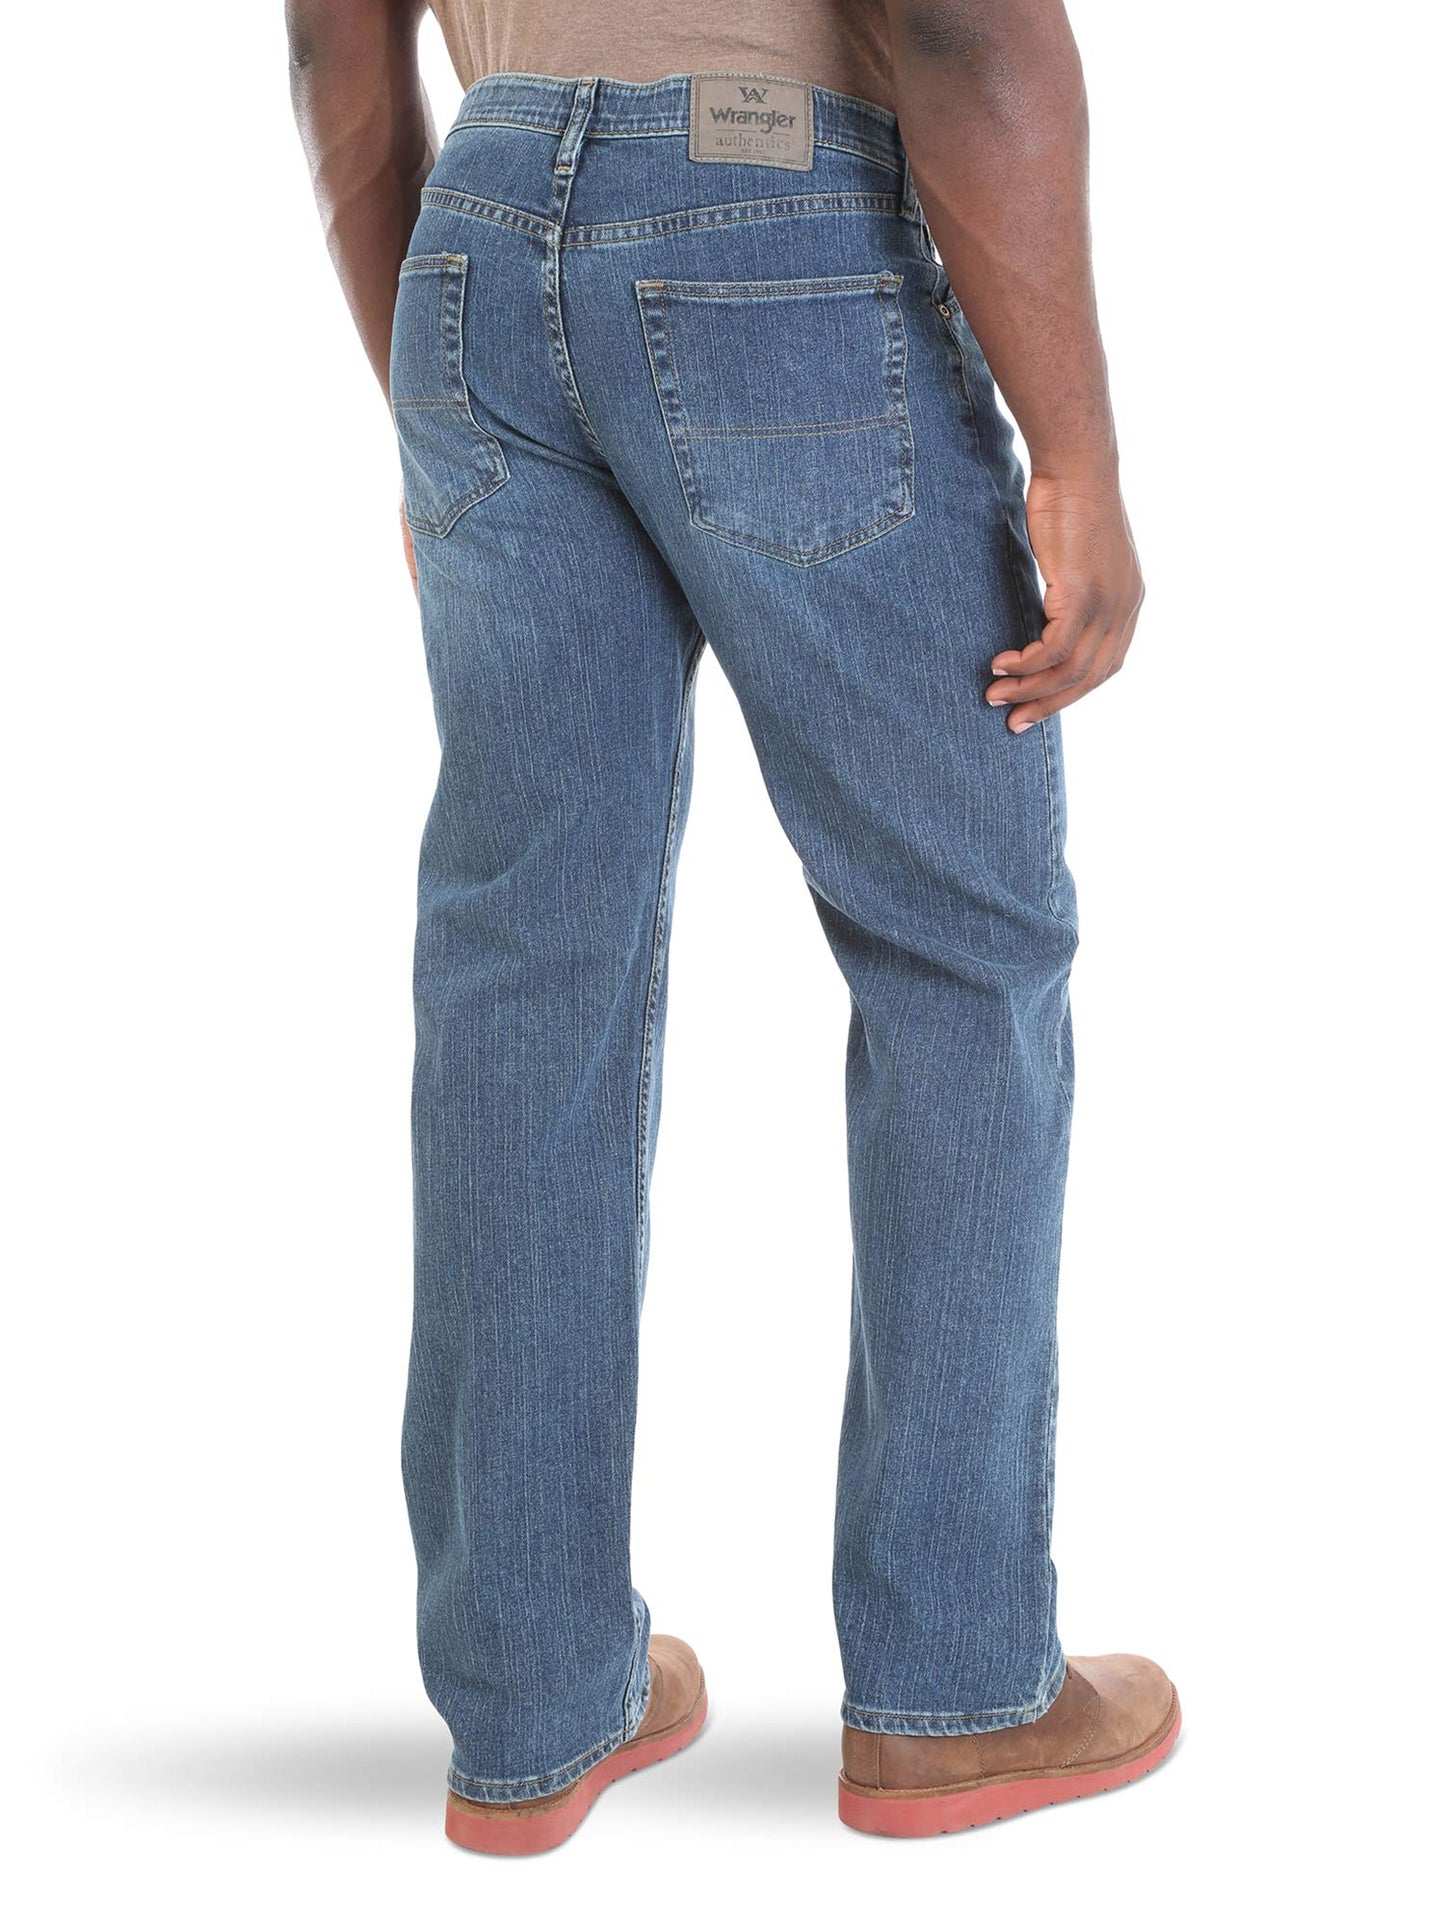 Wrangler Authentics Men's Regular Fit Comfort Flex Waist Jean, Blue Ocean, 33W x 32L